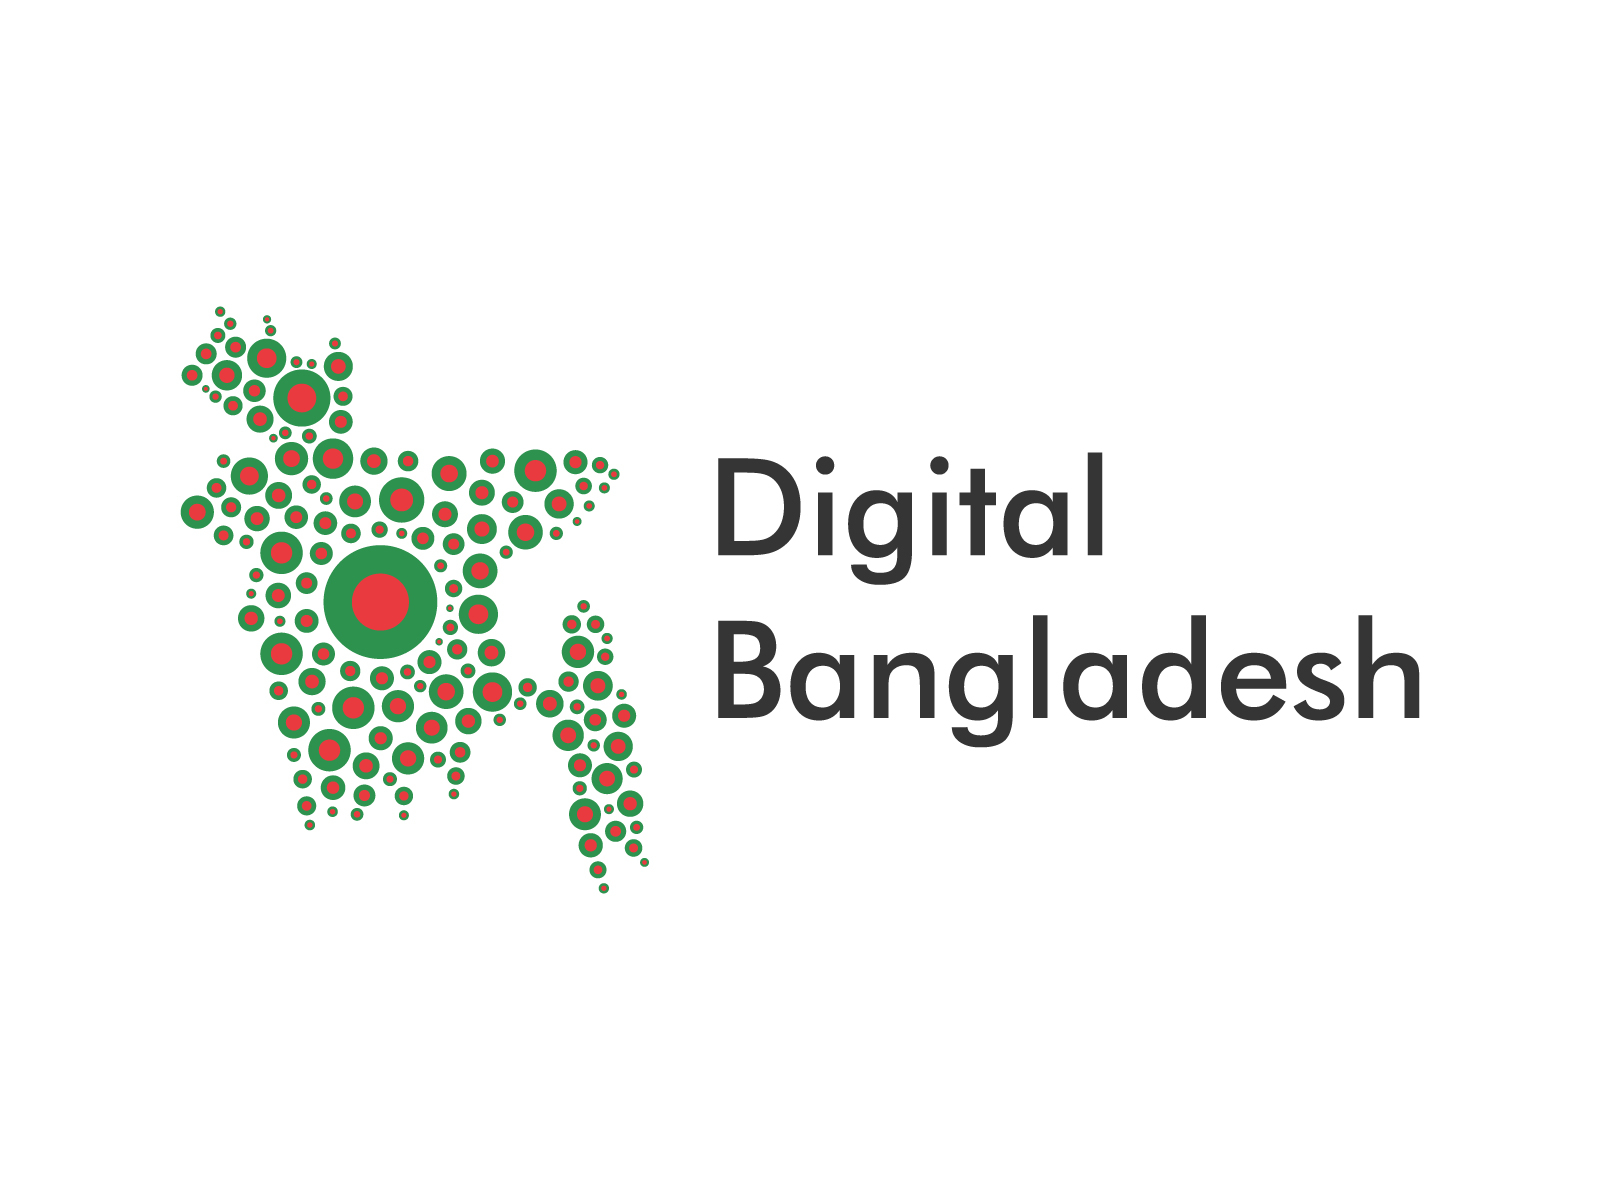 ICC World Twenty20 2014 Bangladesh logo launched